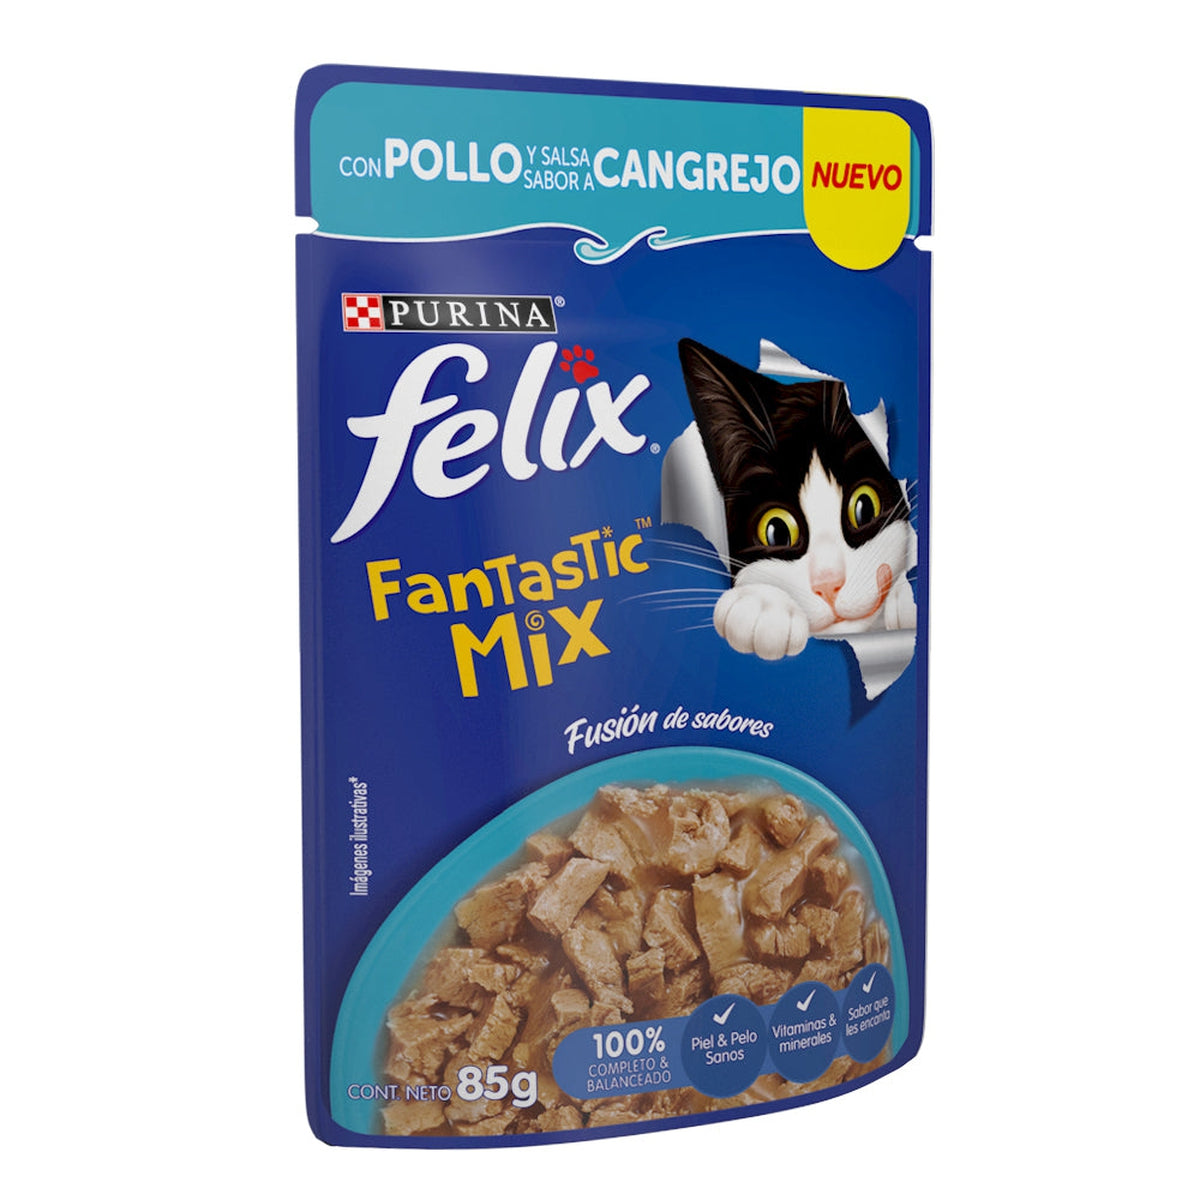 Purina Felix Fantastic Mix con Pollo y Salsa Sabor Cangrejo 24 Pouches